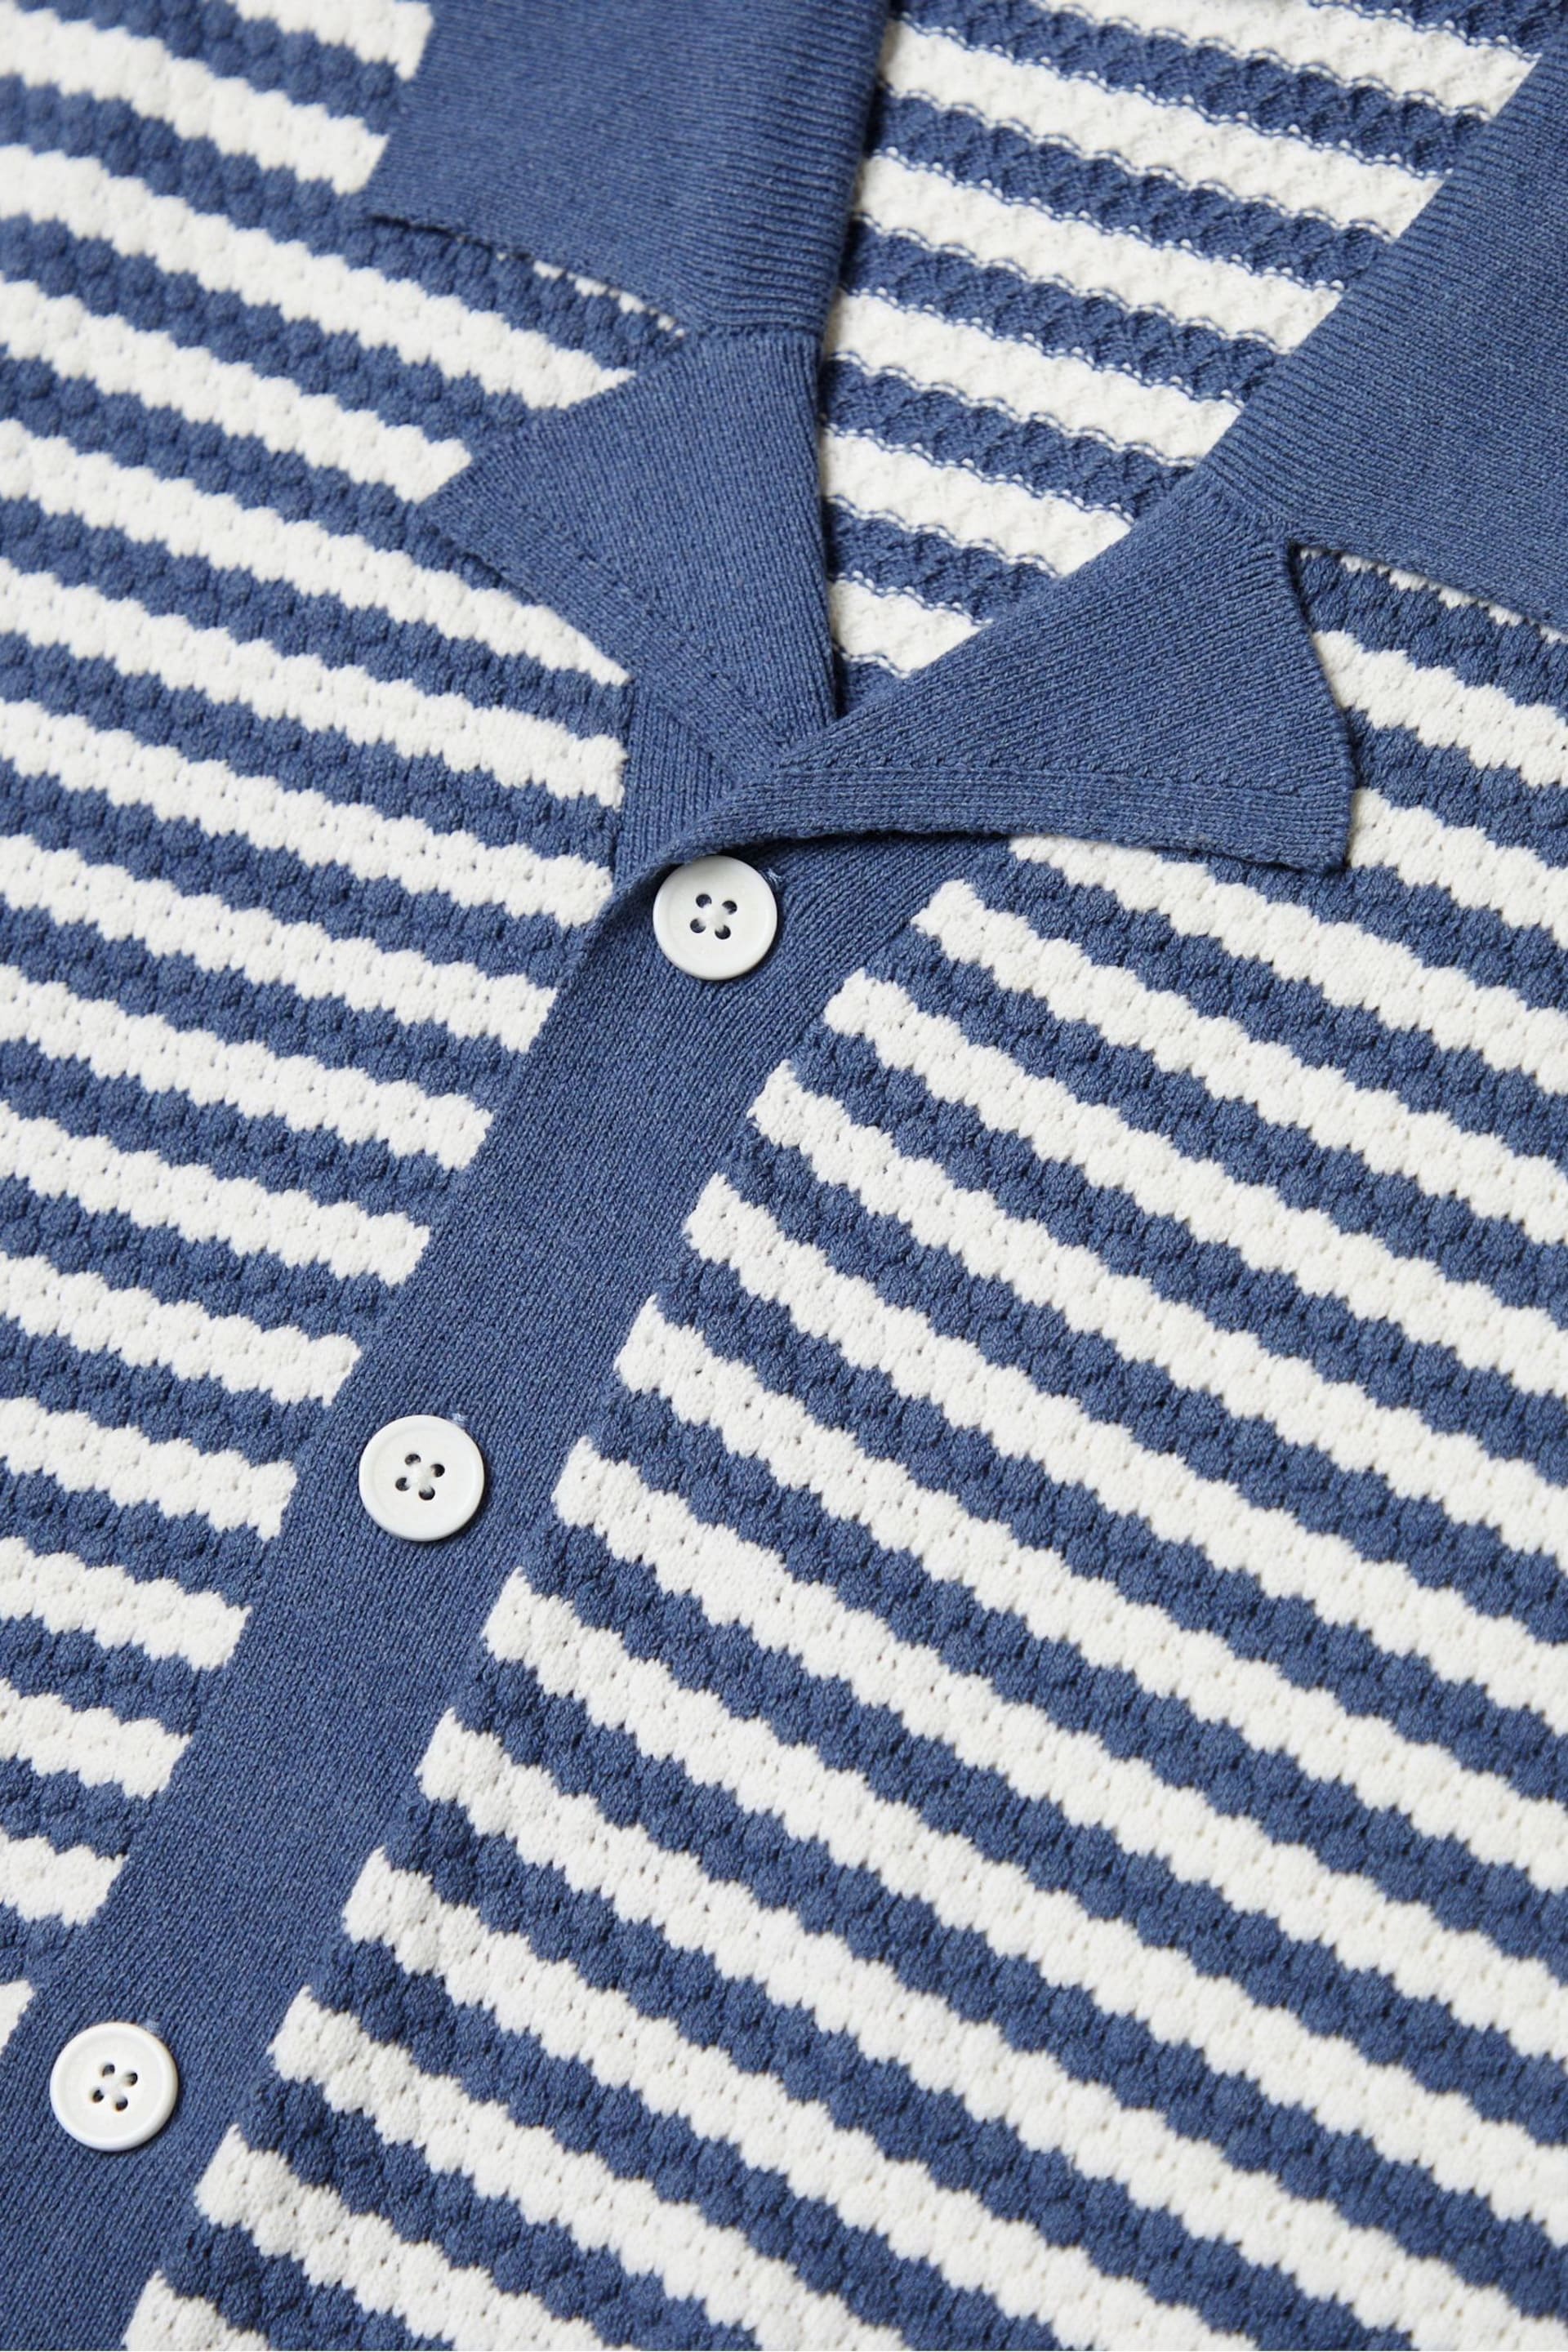 Threadbare Blue & White Cotton Mix Revere Collar Short Sleeve Textured Knitted Shirt - Image 6 of 6